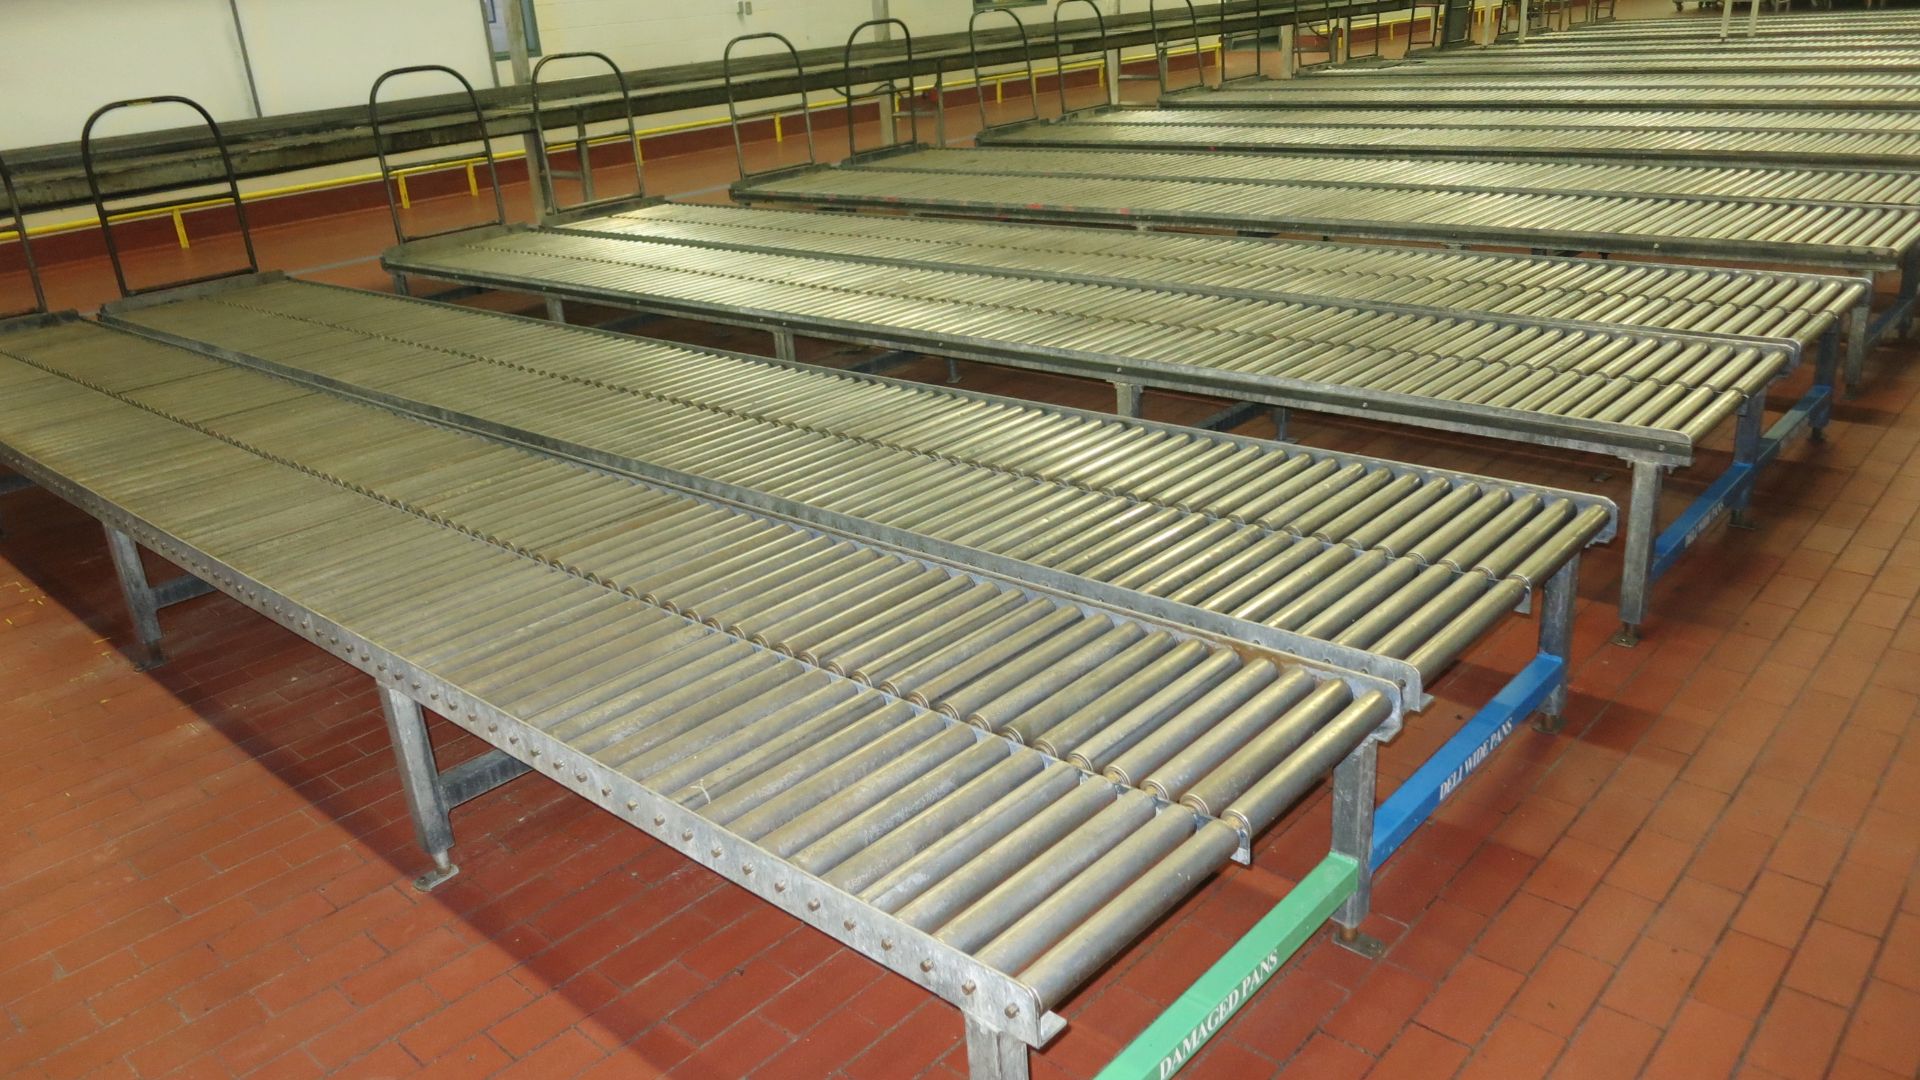 [Lot] Roller bed storage system including (9) 20' long 70" wide stands - Image 2 of 2